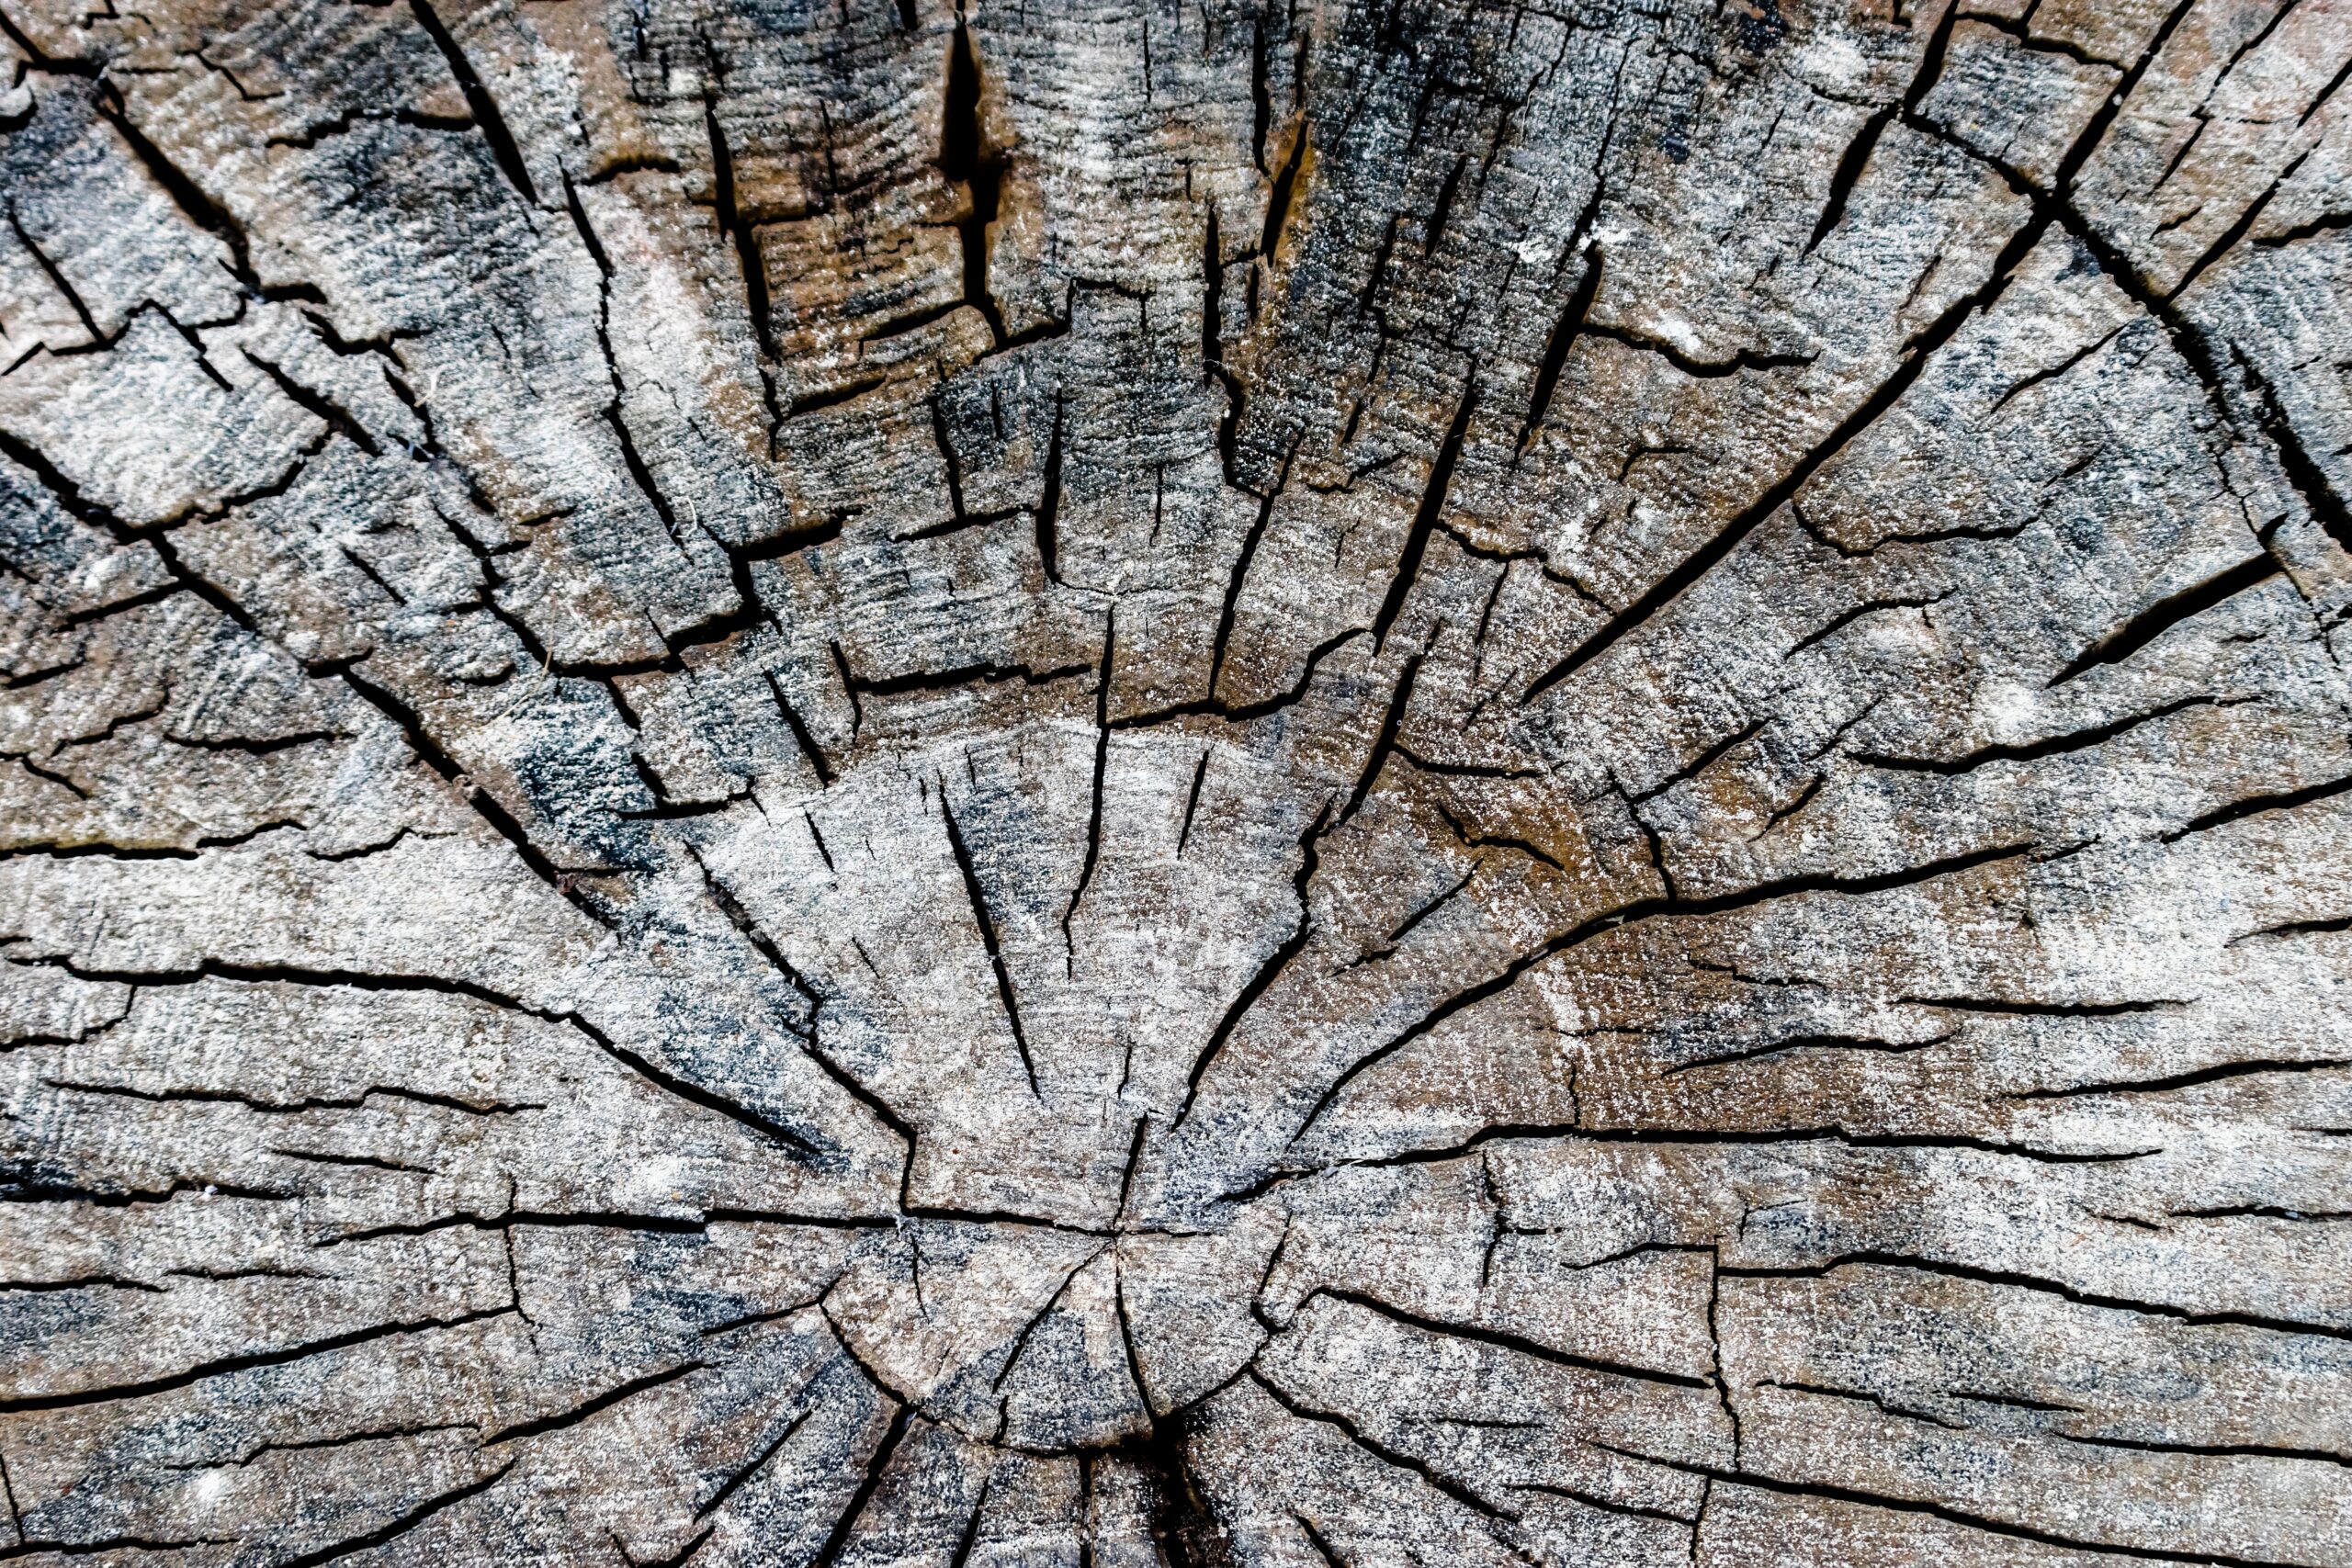 wood grain - integrative care blog post image